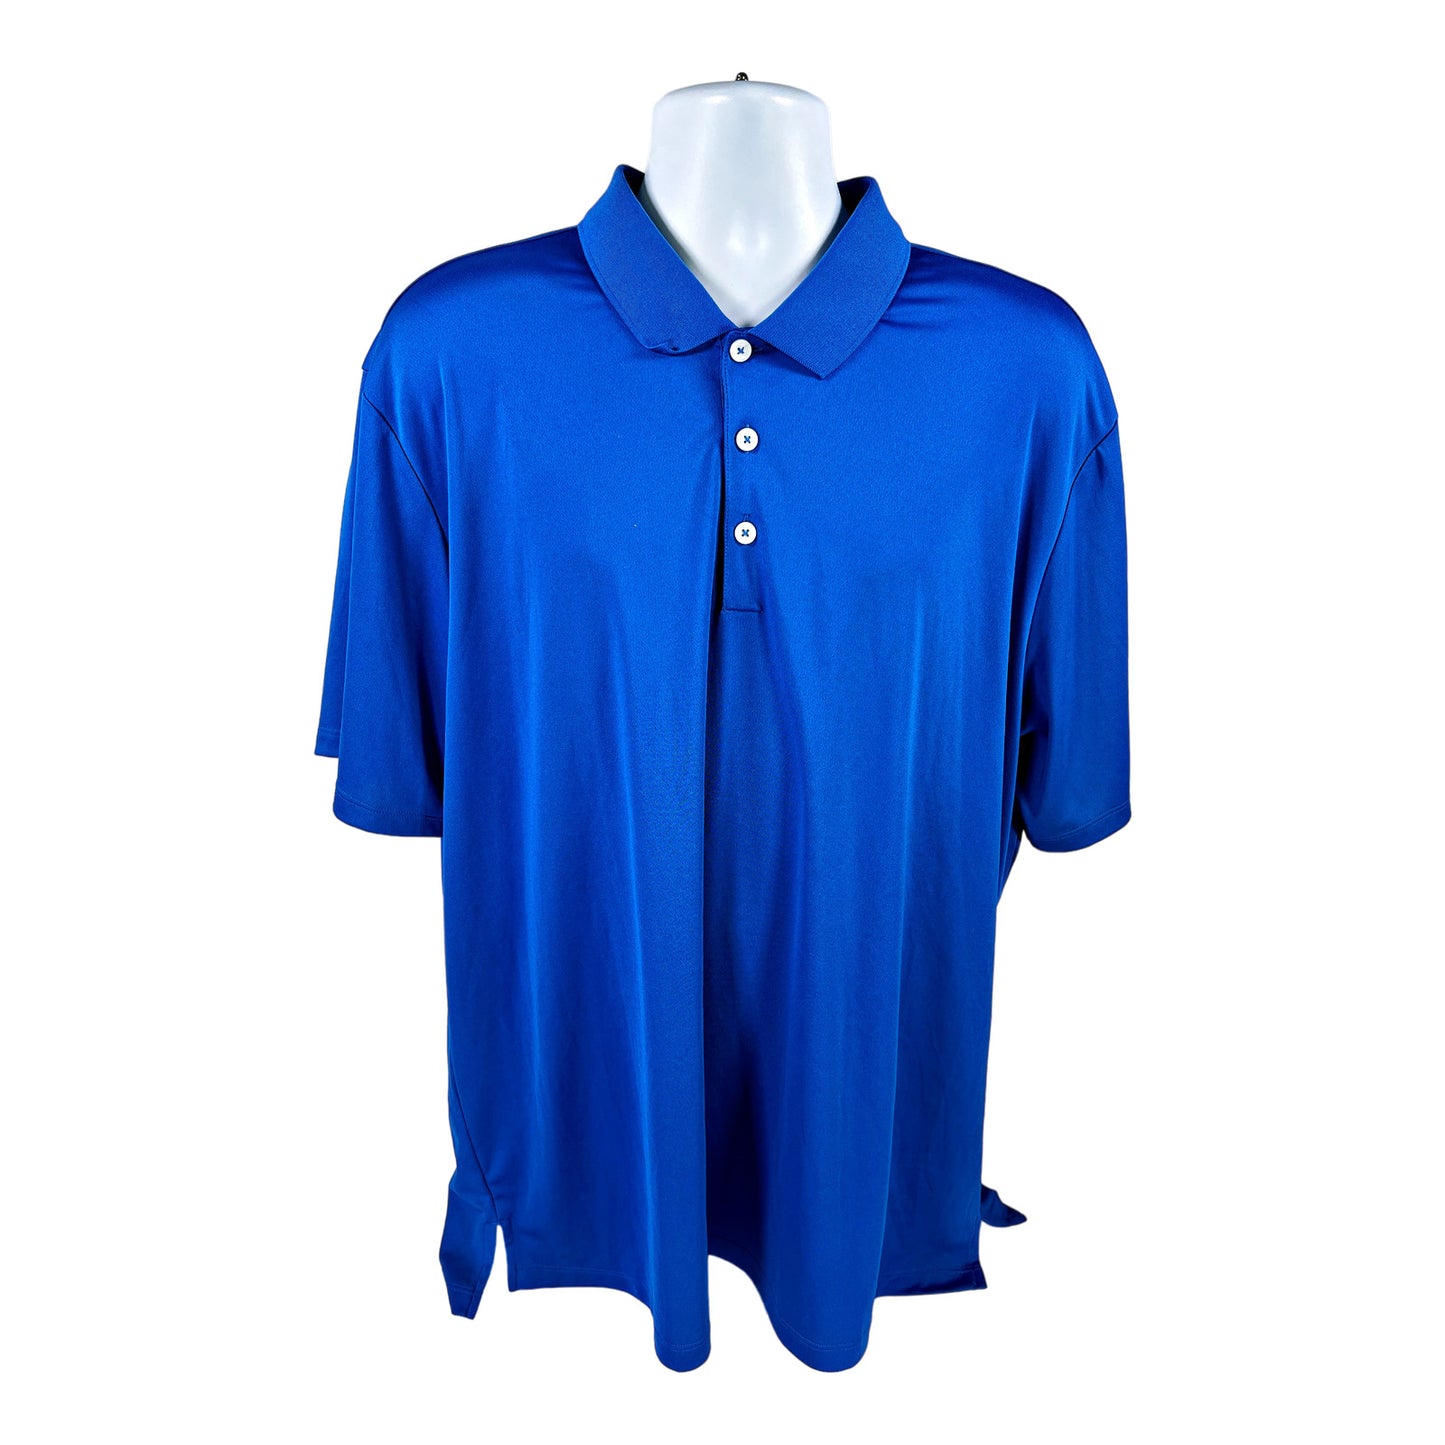 Adidas Men’s Blue Short Sleeve Climacool Golf Polo - 2XL